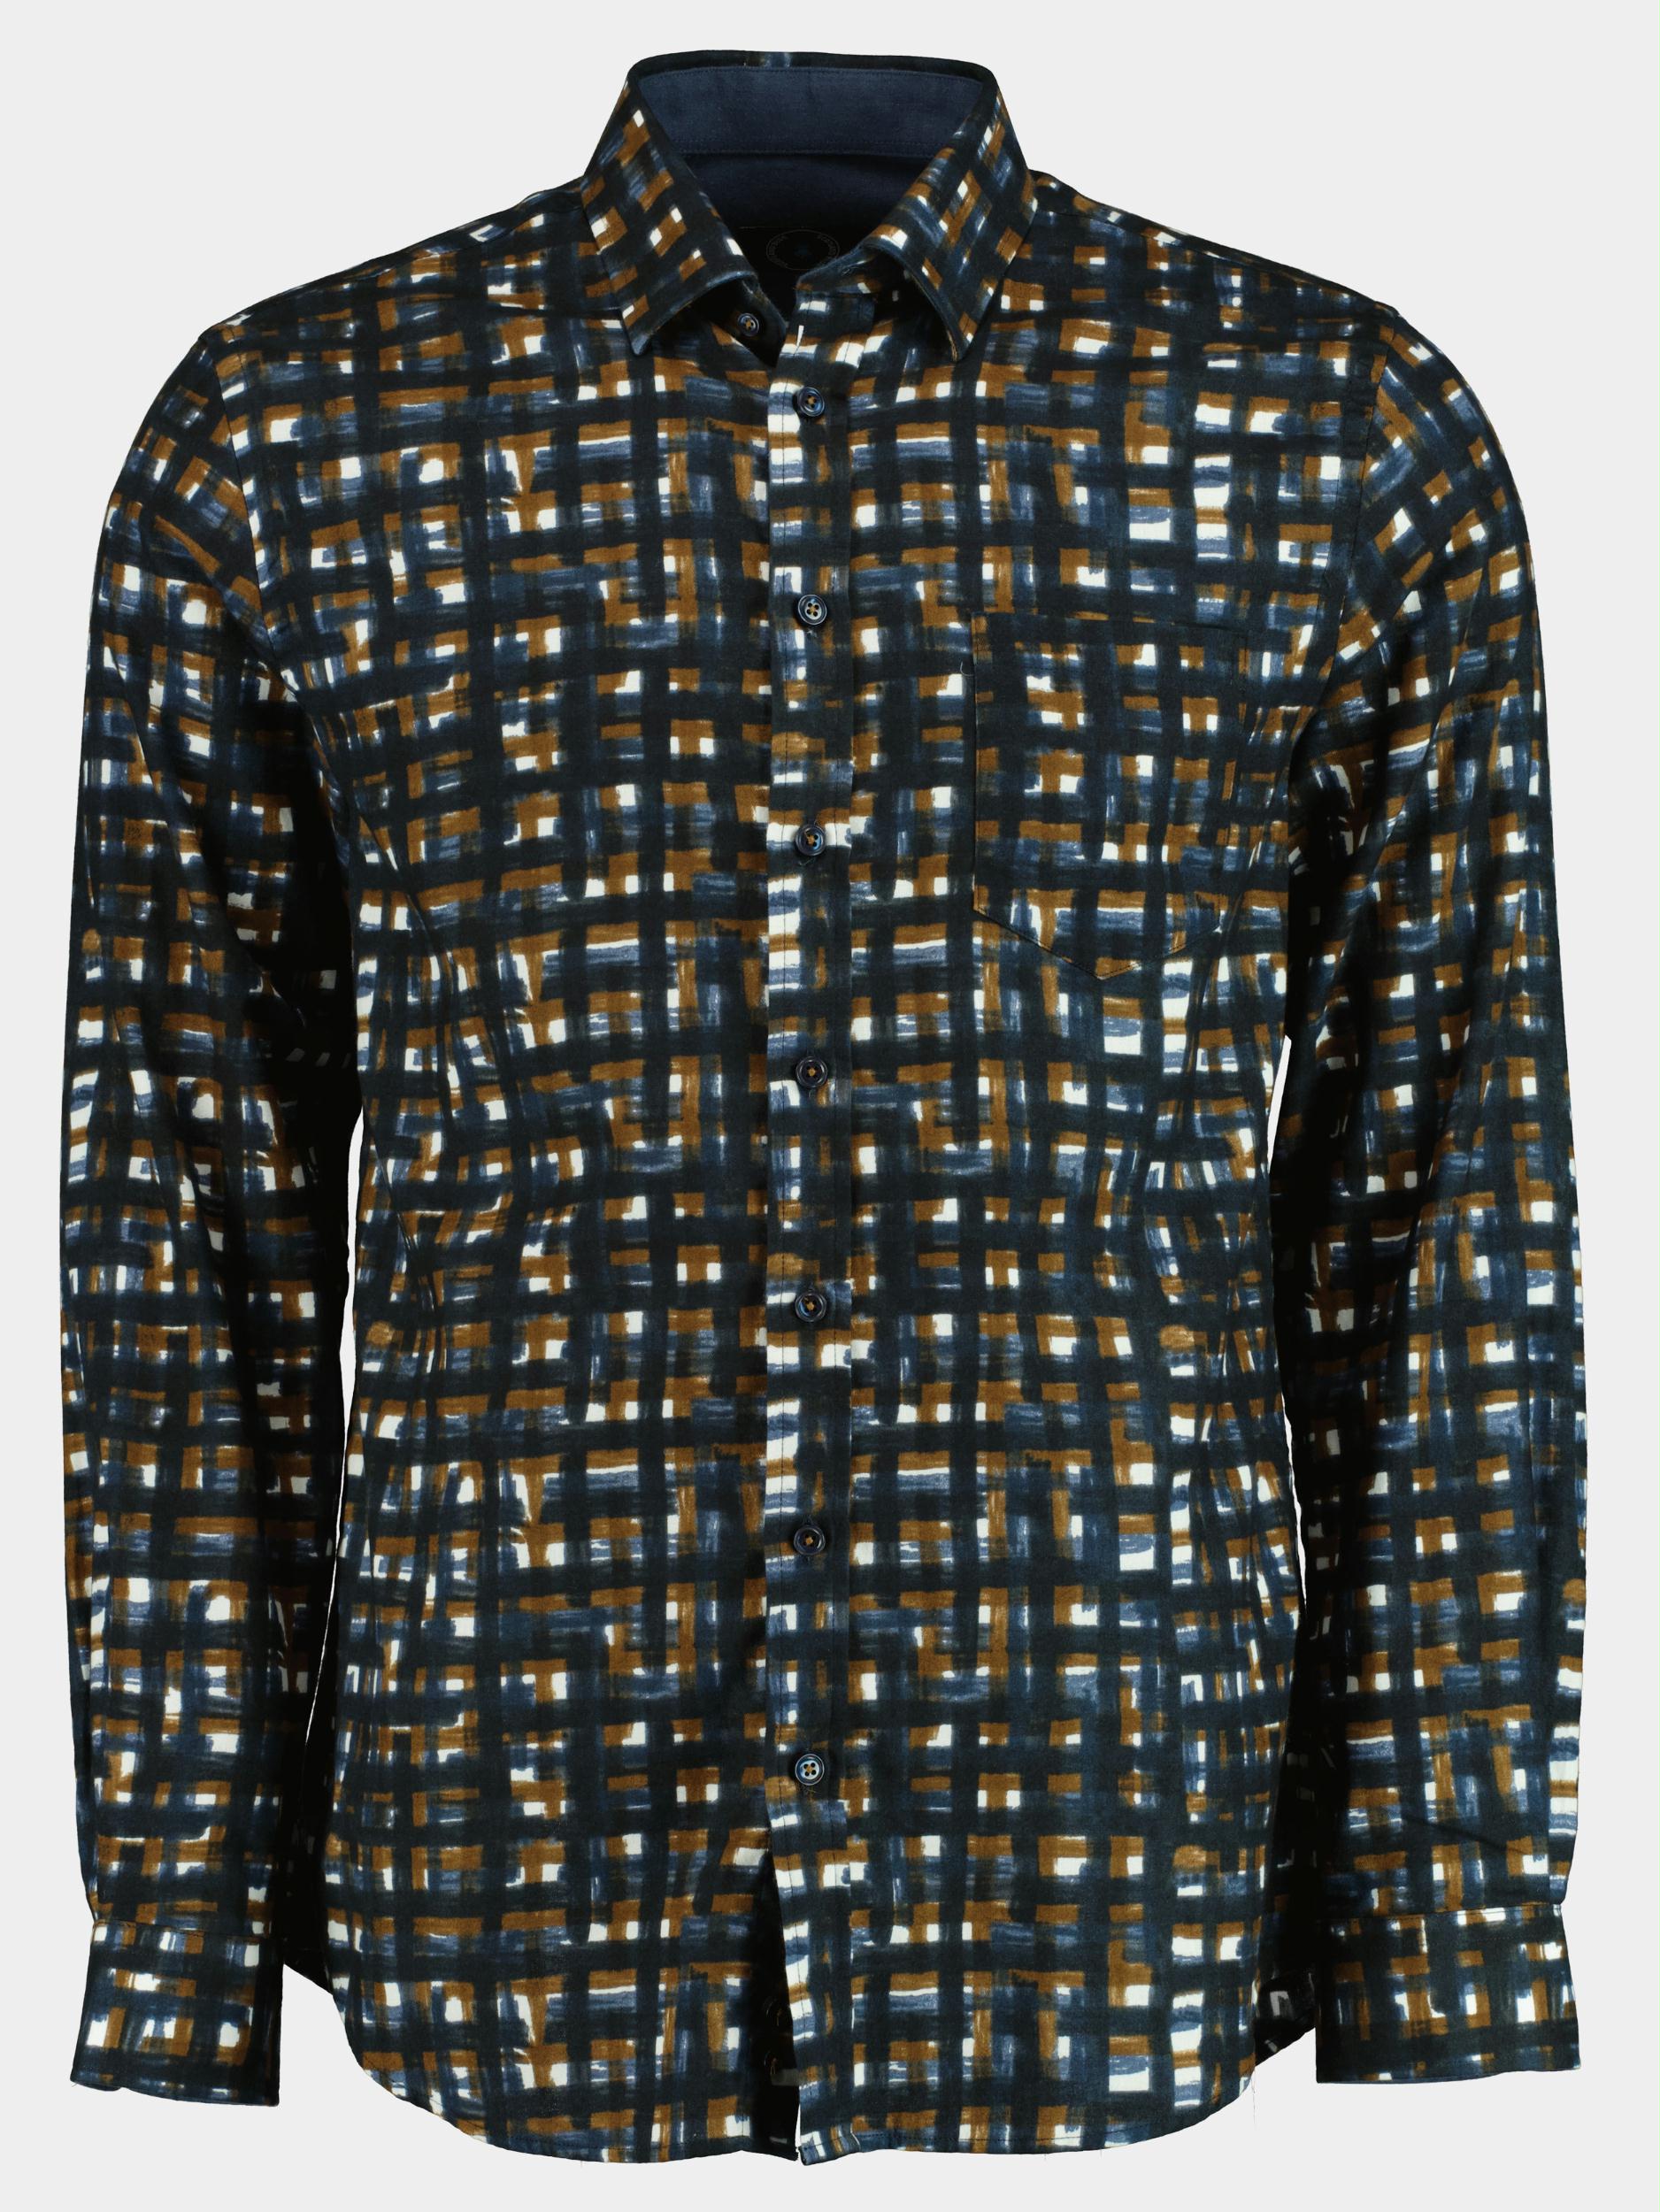 Scotland Blue Casual hemd lange mouw Bruin Ward Flanel Dig Printed Shirt 22307WA05SB/359 khaki